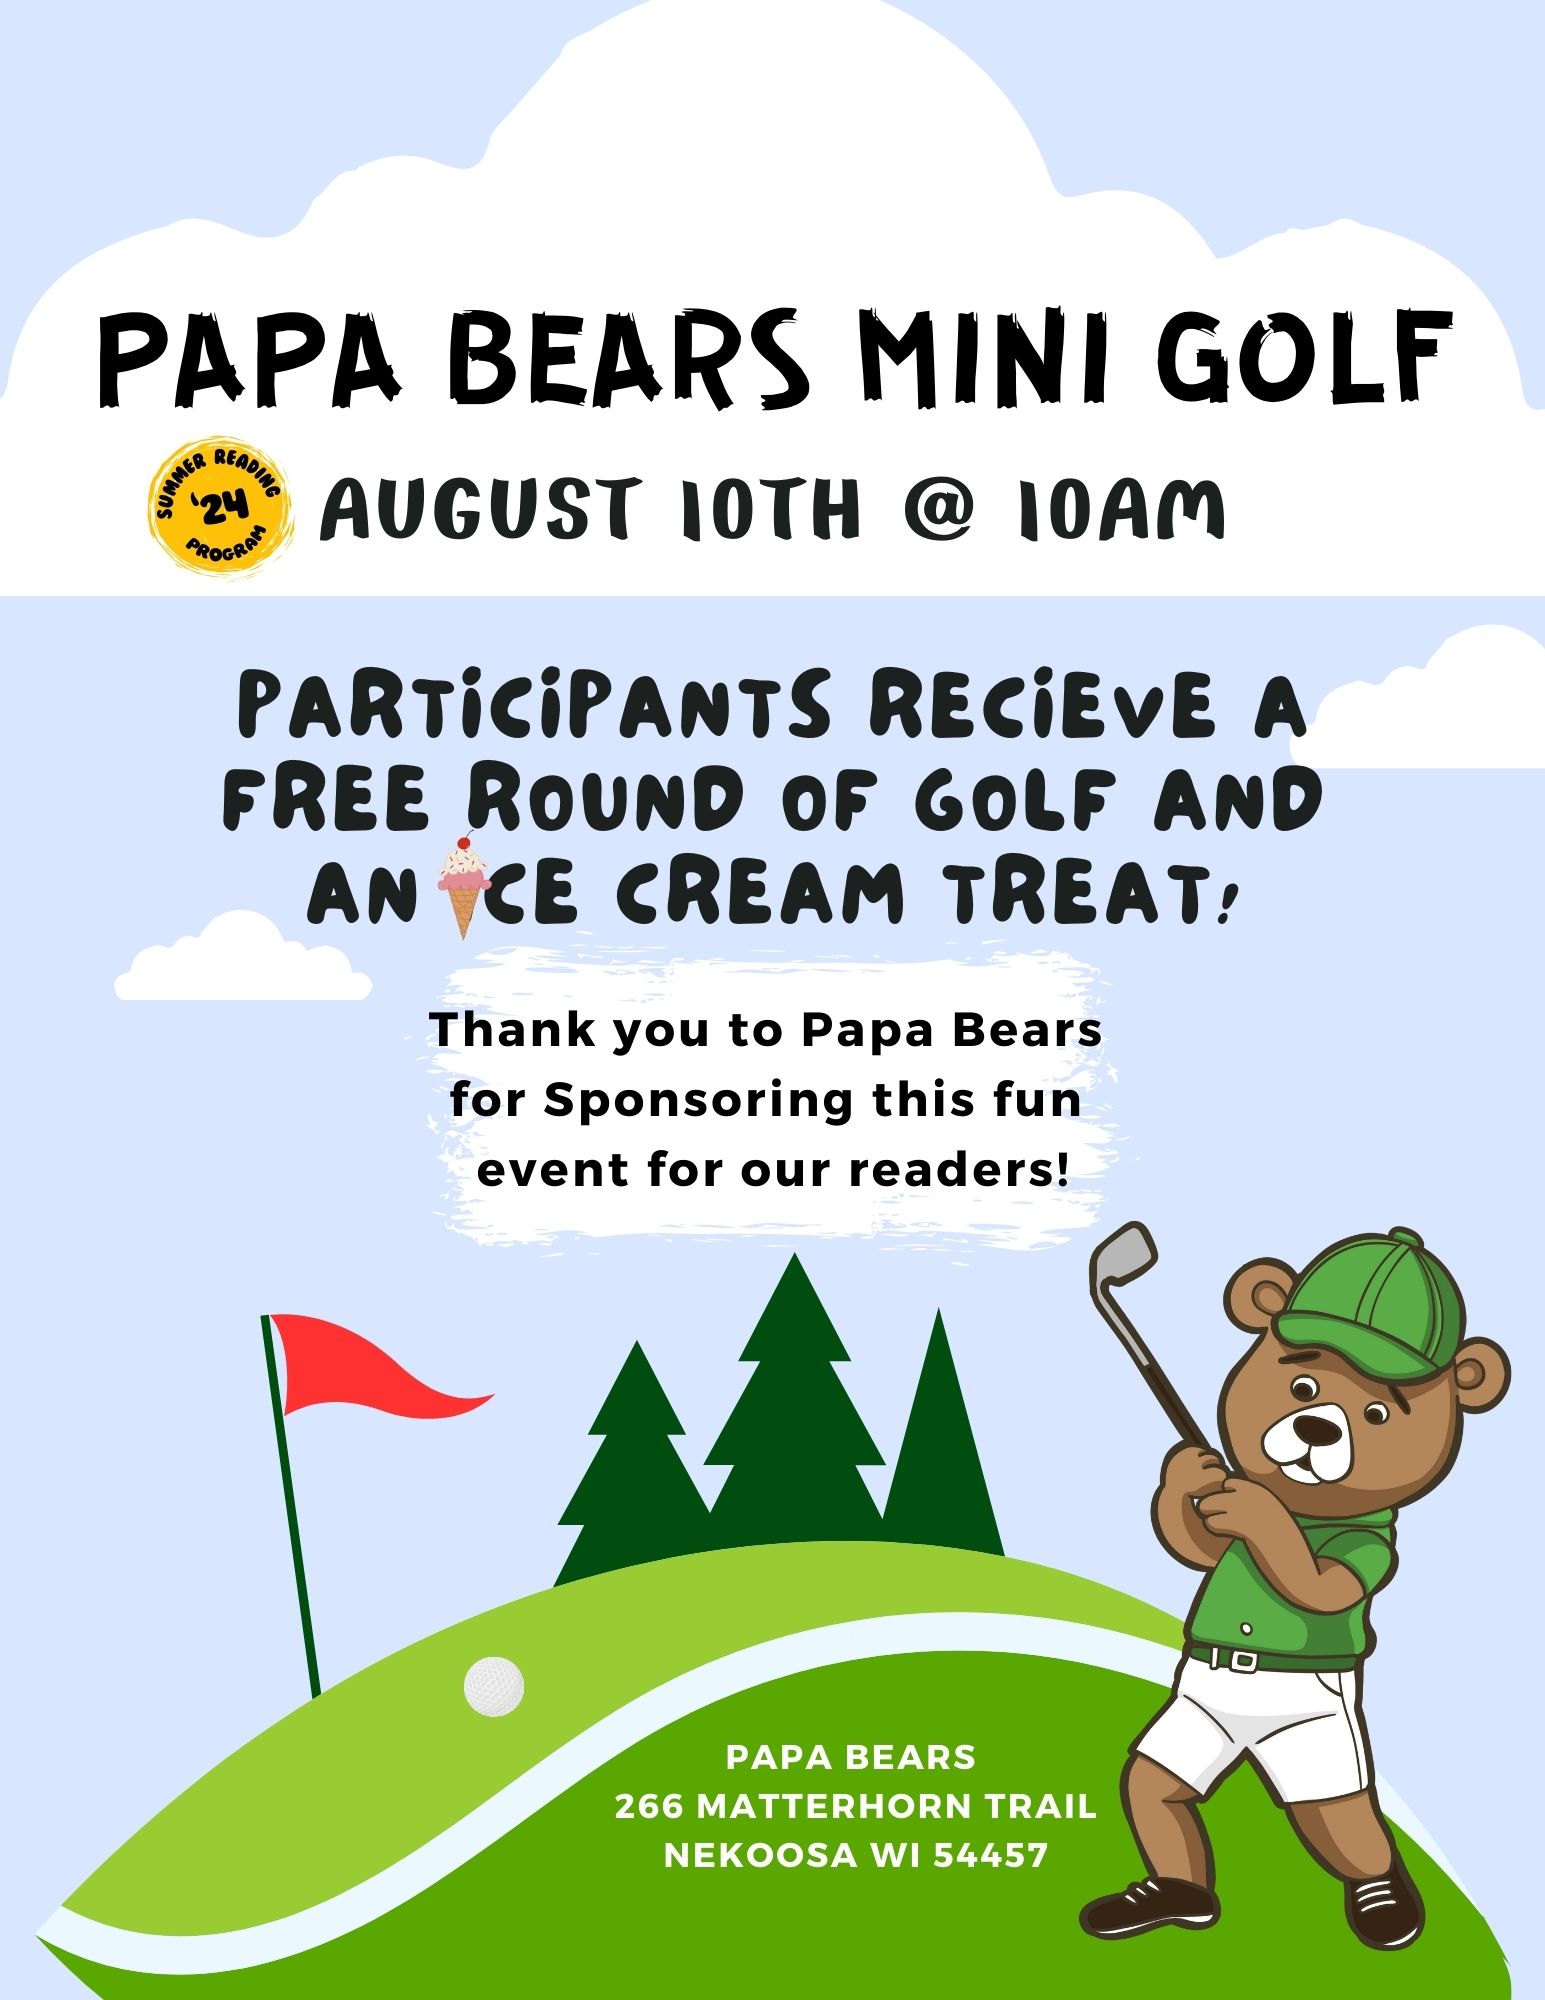 Papa Bears Mini Golf 266 Matterhorn Trail, Nekoosa, WI 54457